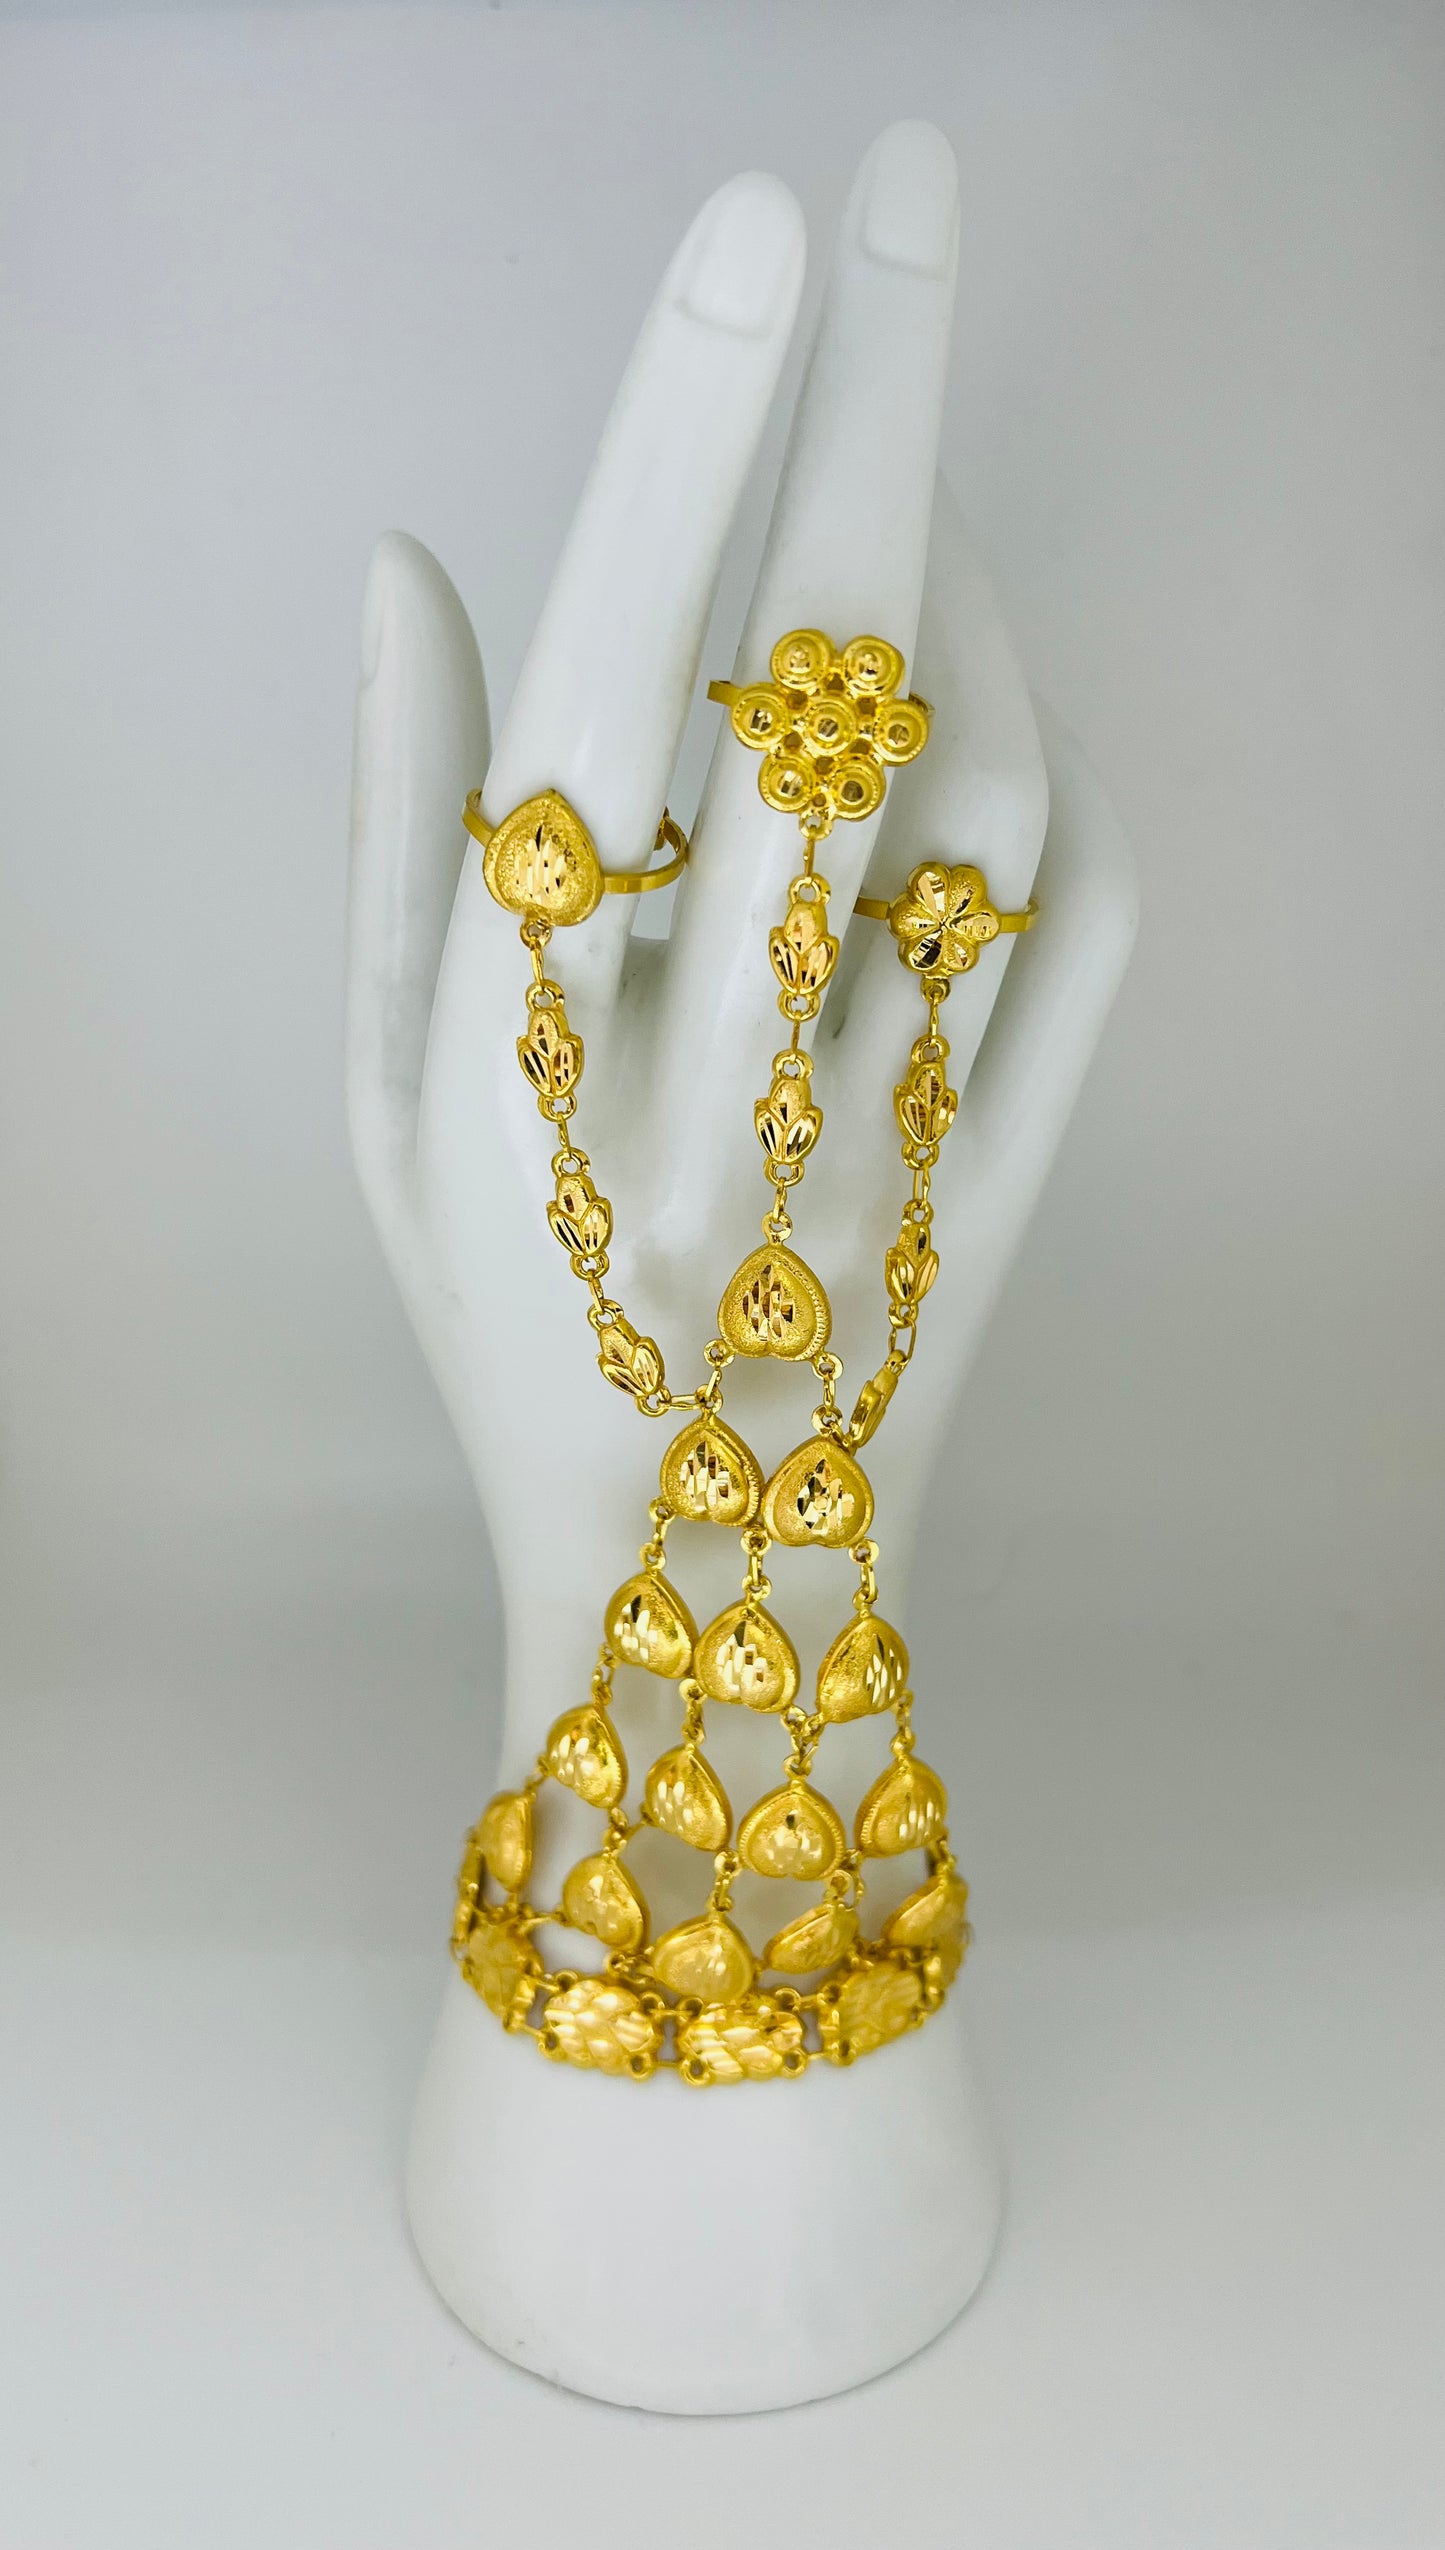 21k Gold Hand-Jewelry